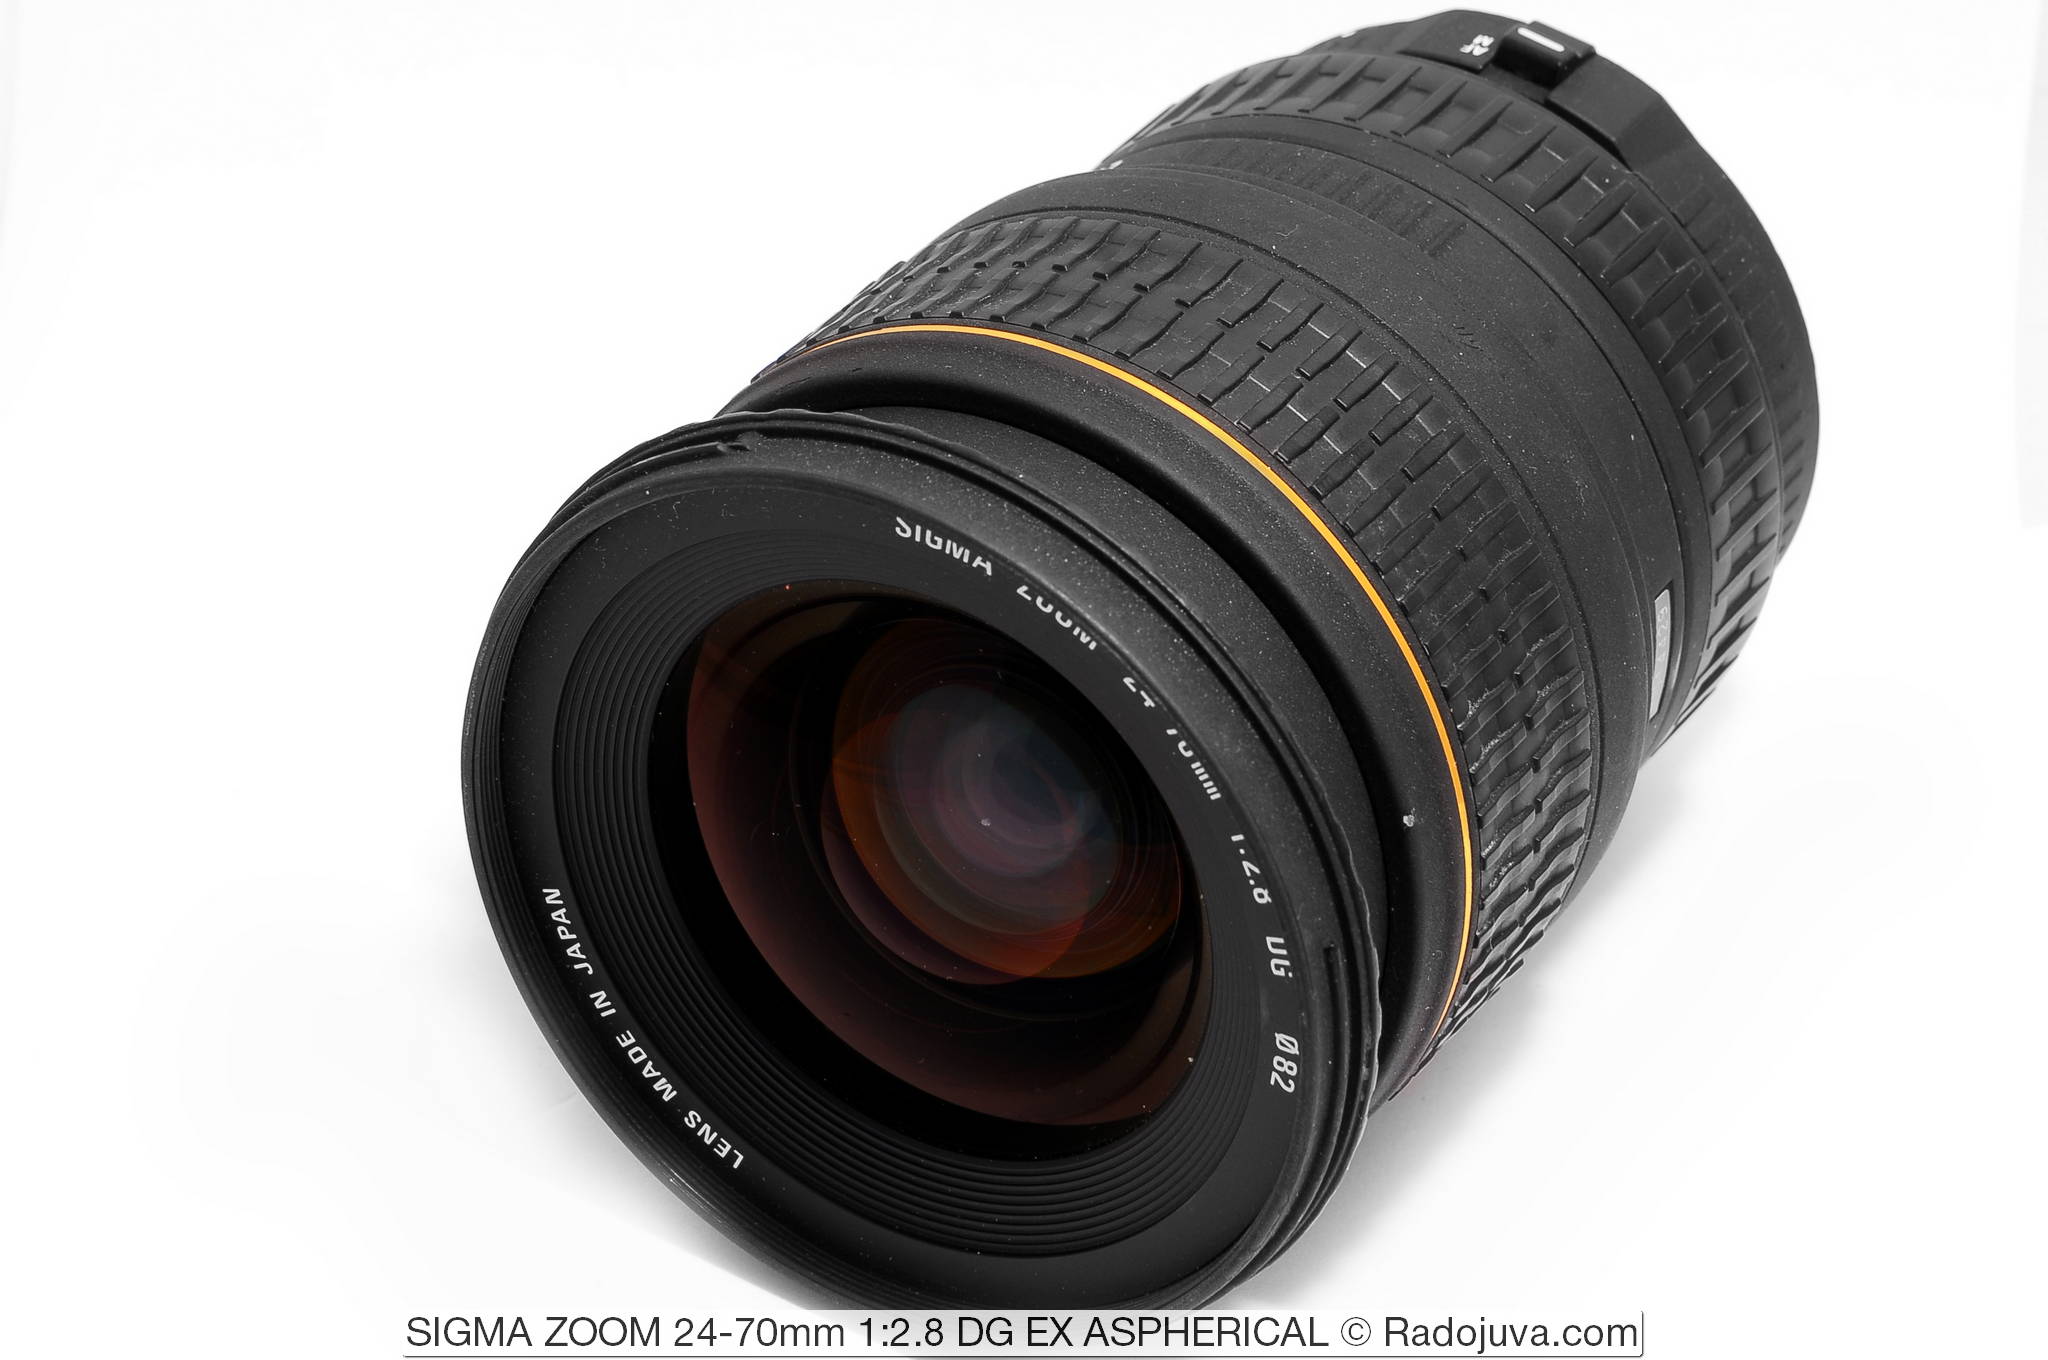 SIGMA ZOOM 24-70mm 1: 2.8 DG EX ASPHERICAL Review | Happy